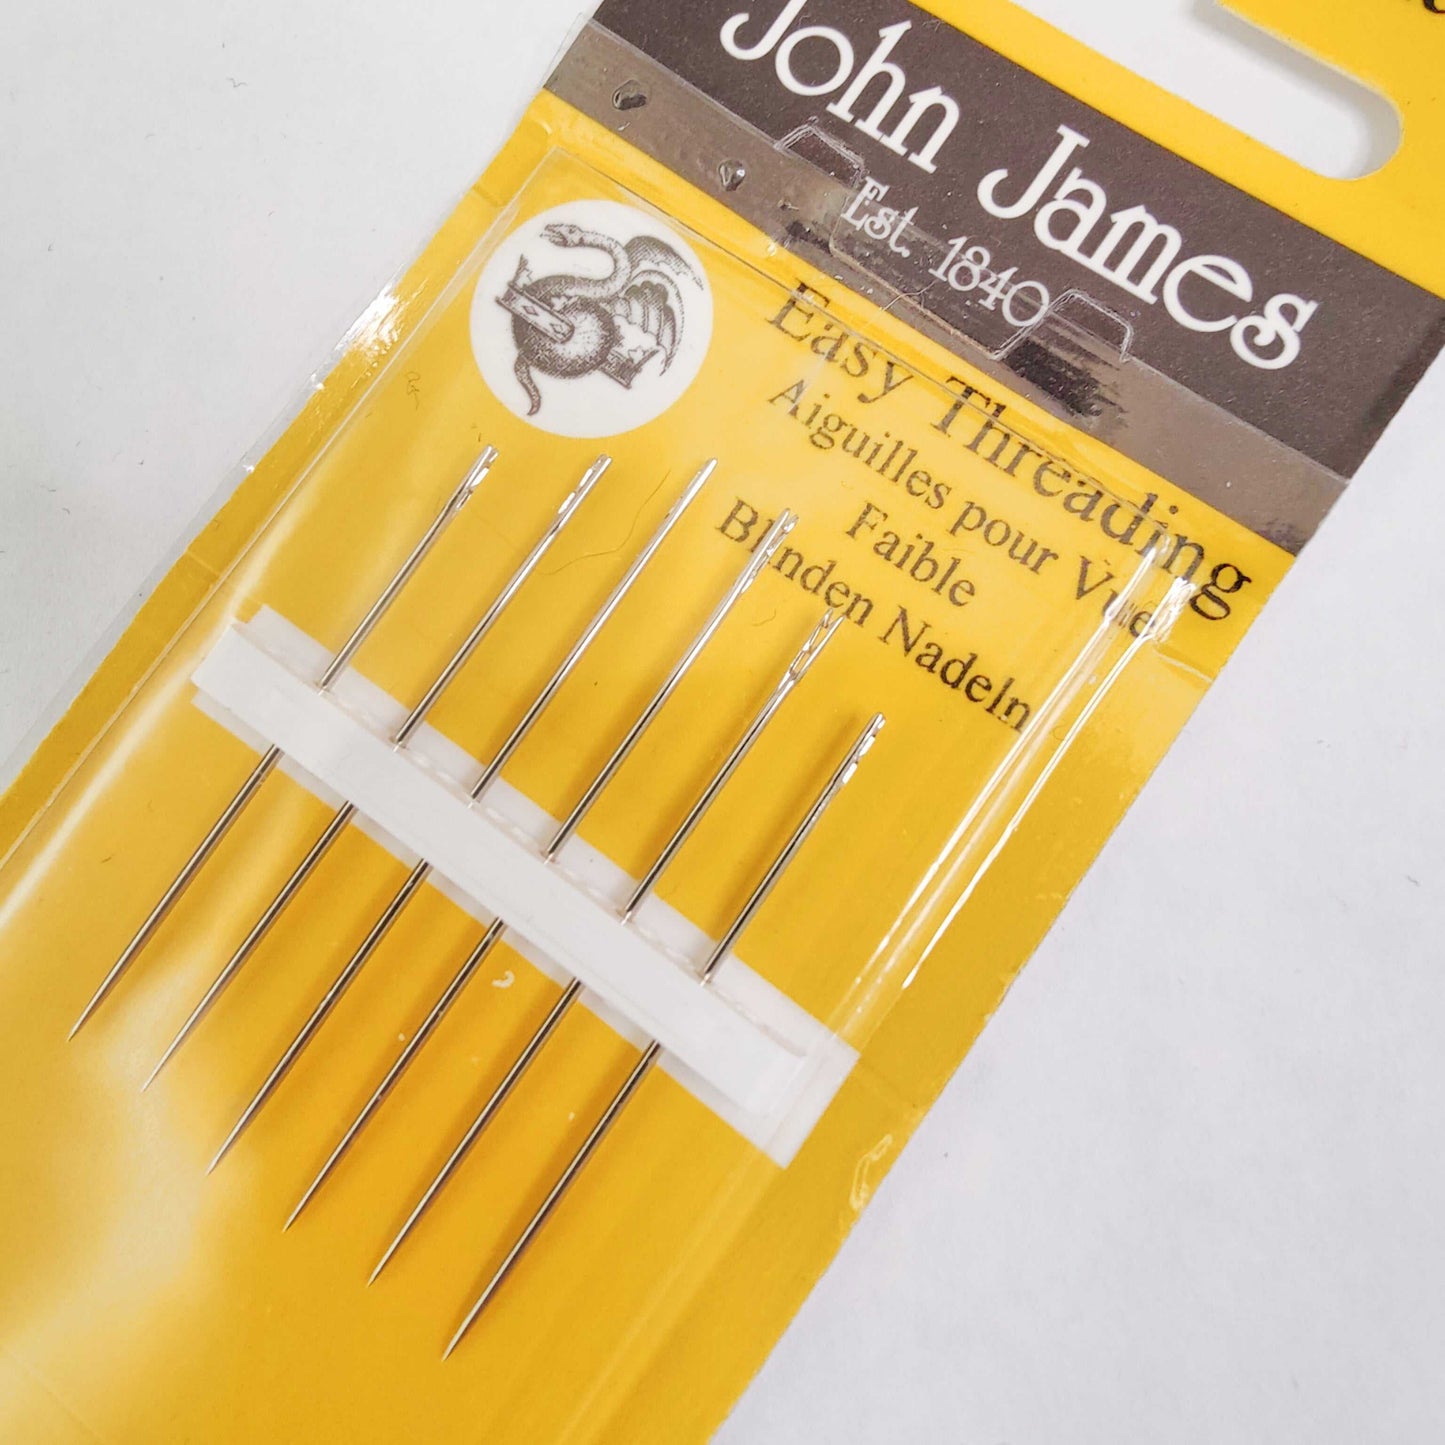 Hand sewing needles | John James Sharps #4/8 Easy Thread | John James | Tool